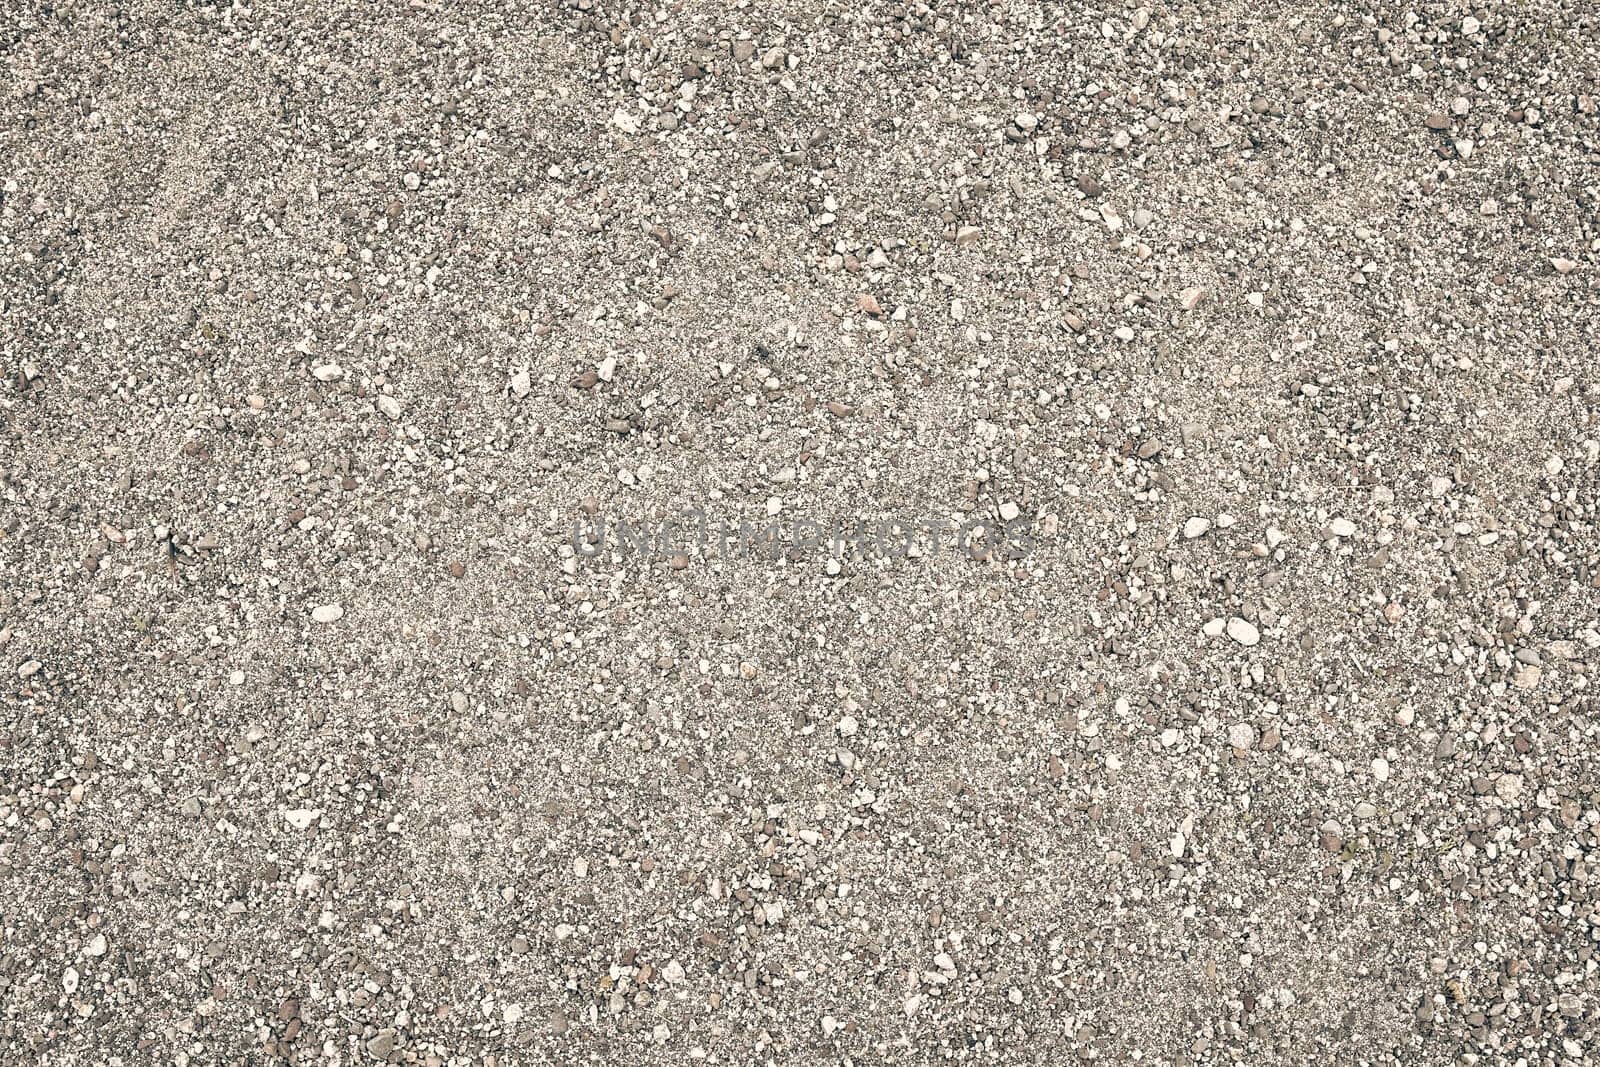 Asphalt texture. Shiny new grey road abstract texture background.